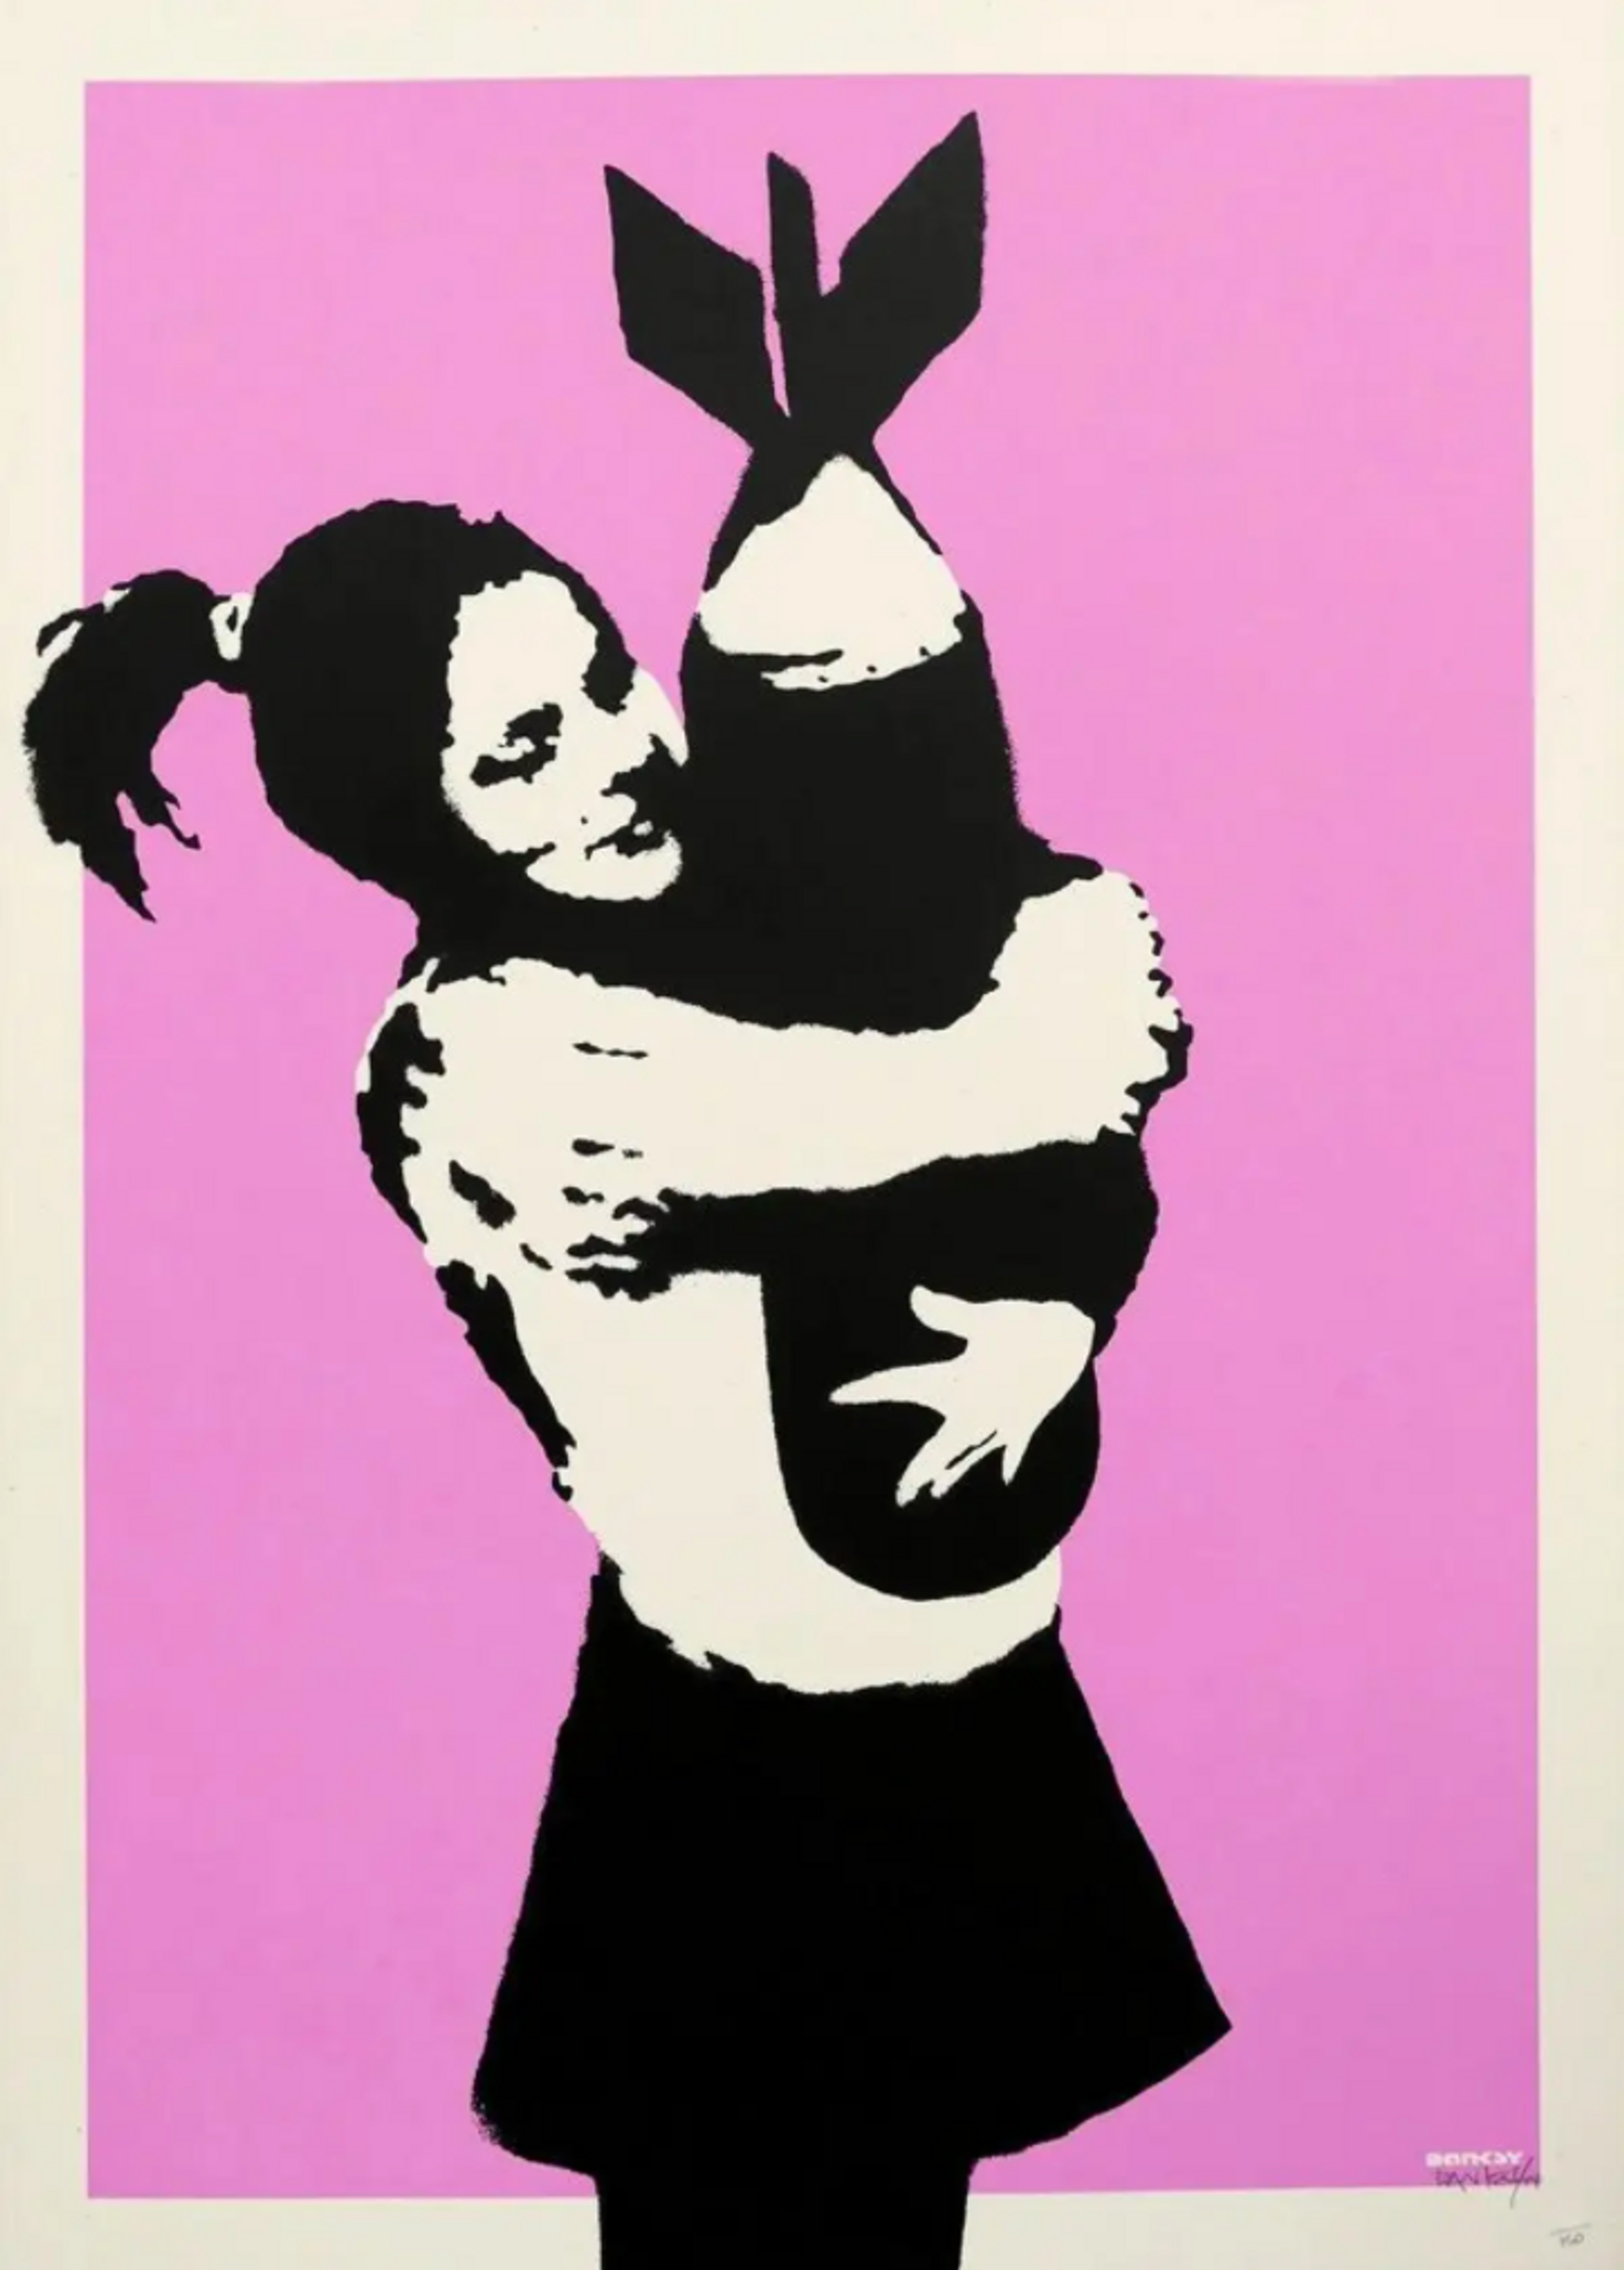 Bomb Love by Banksy